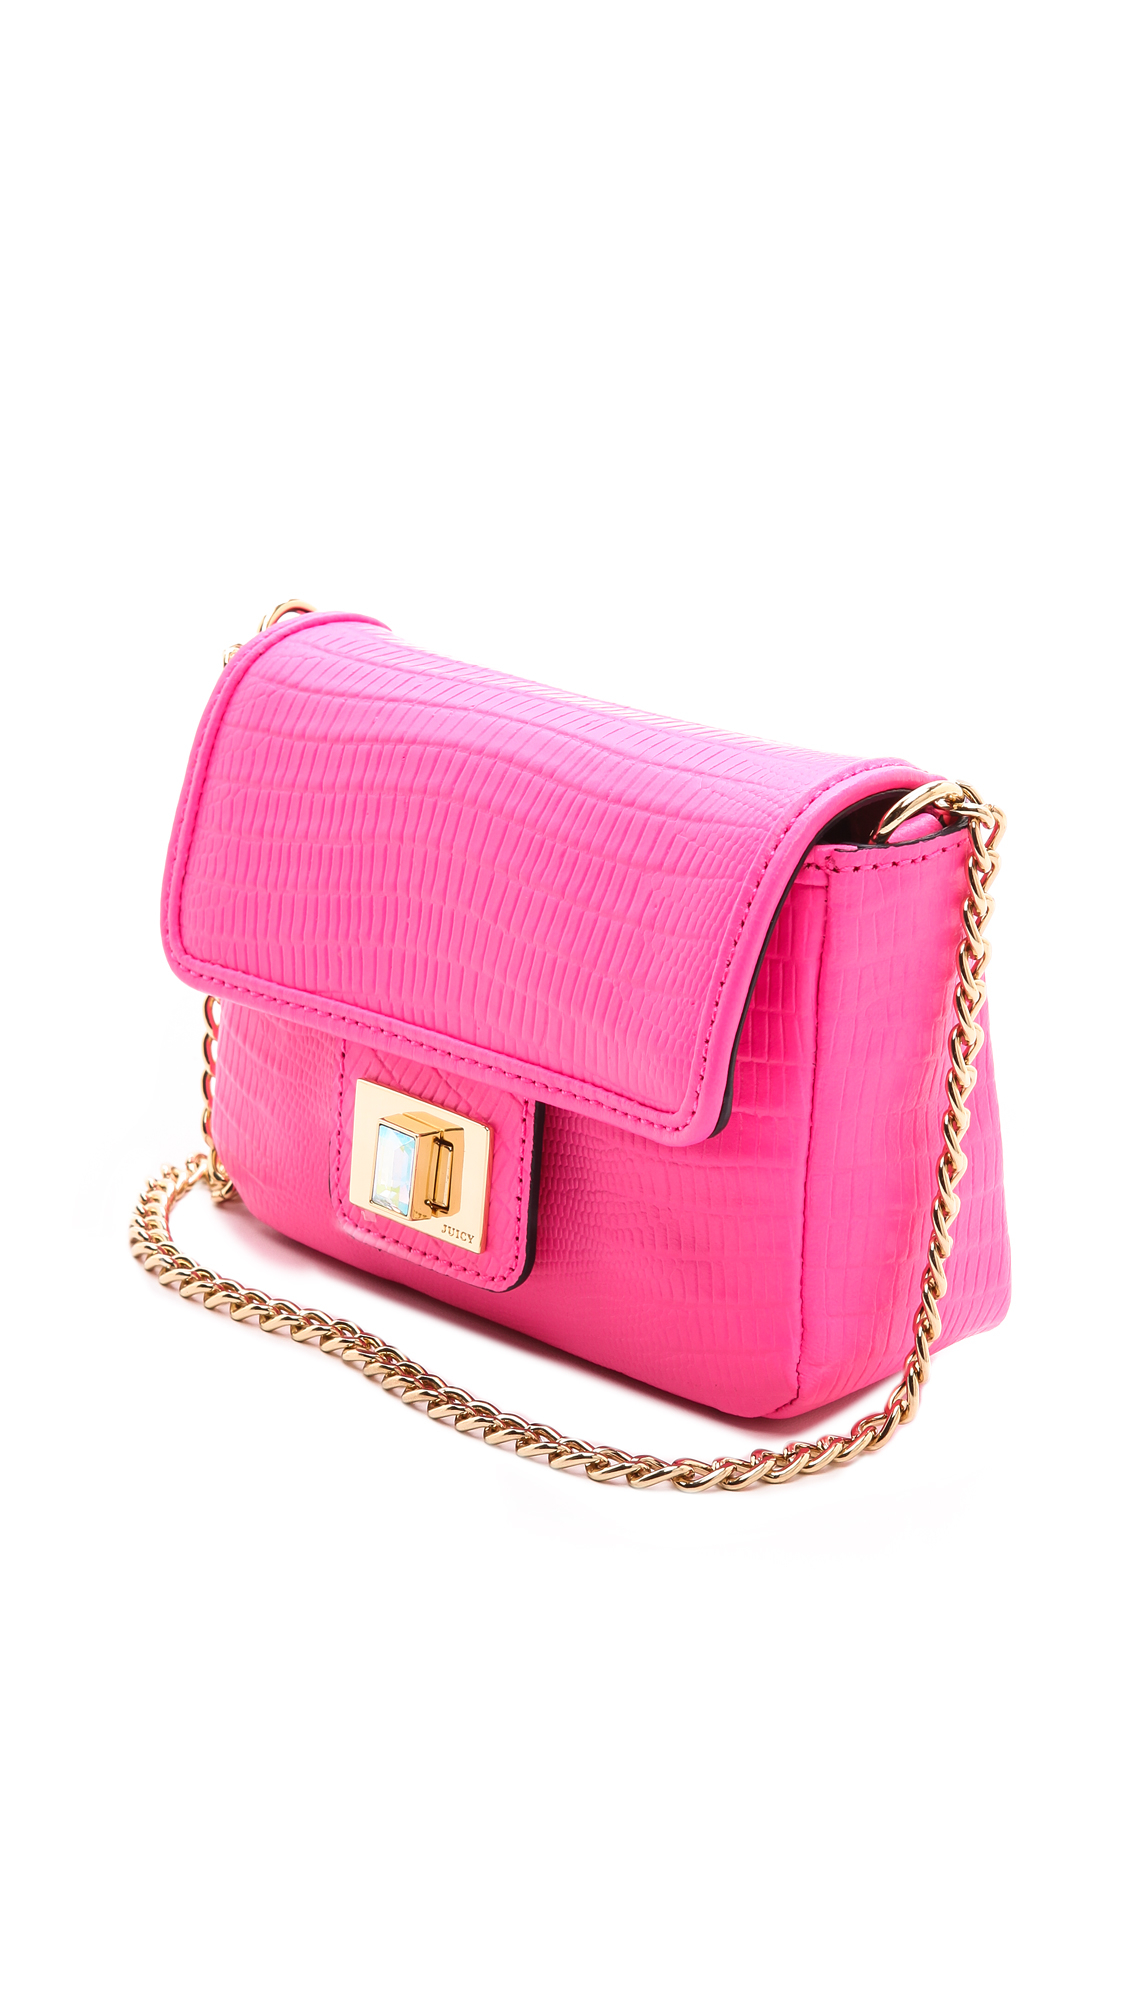 Juicy Couture Sierra Sorbet Mini G Bag White in Pink - Lyst